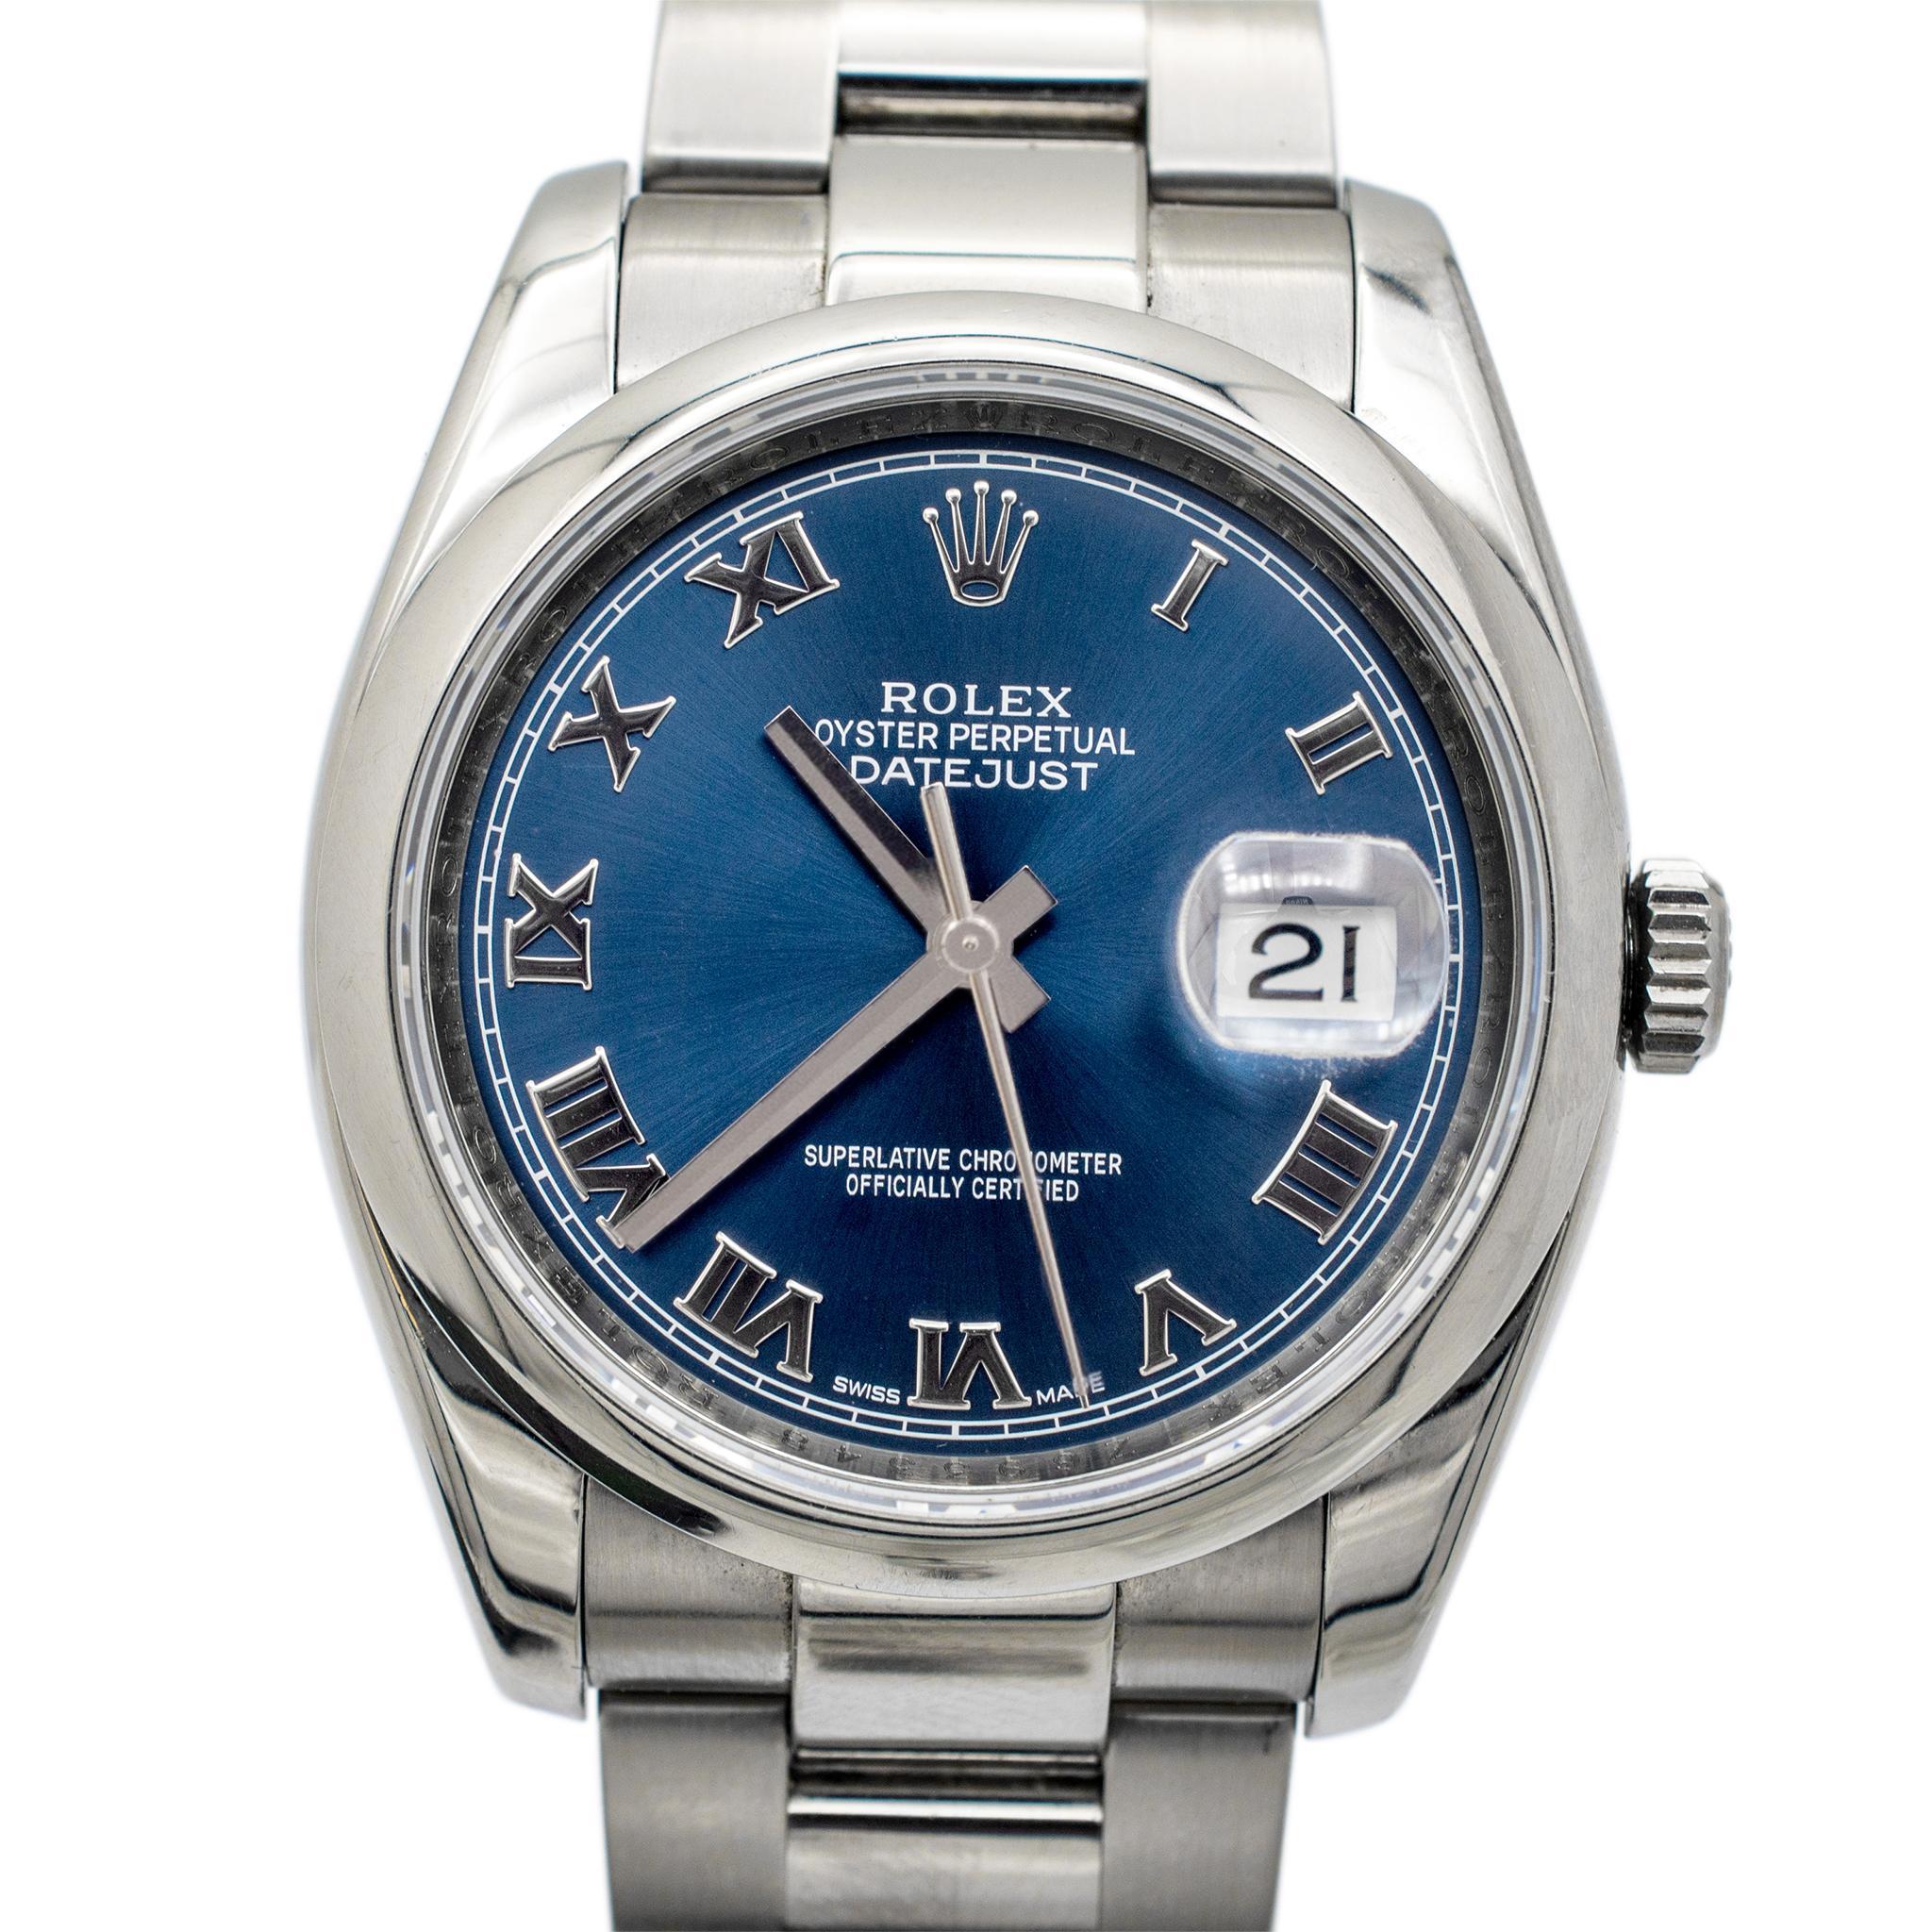 Brand: Rolex 

Gender: Unisex

Metal Type: Stainless Steel

Diameter : 36.00 mm

Weight: 123.20 grams

Stainless Steel ROLEX Swiss made watch. The 